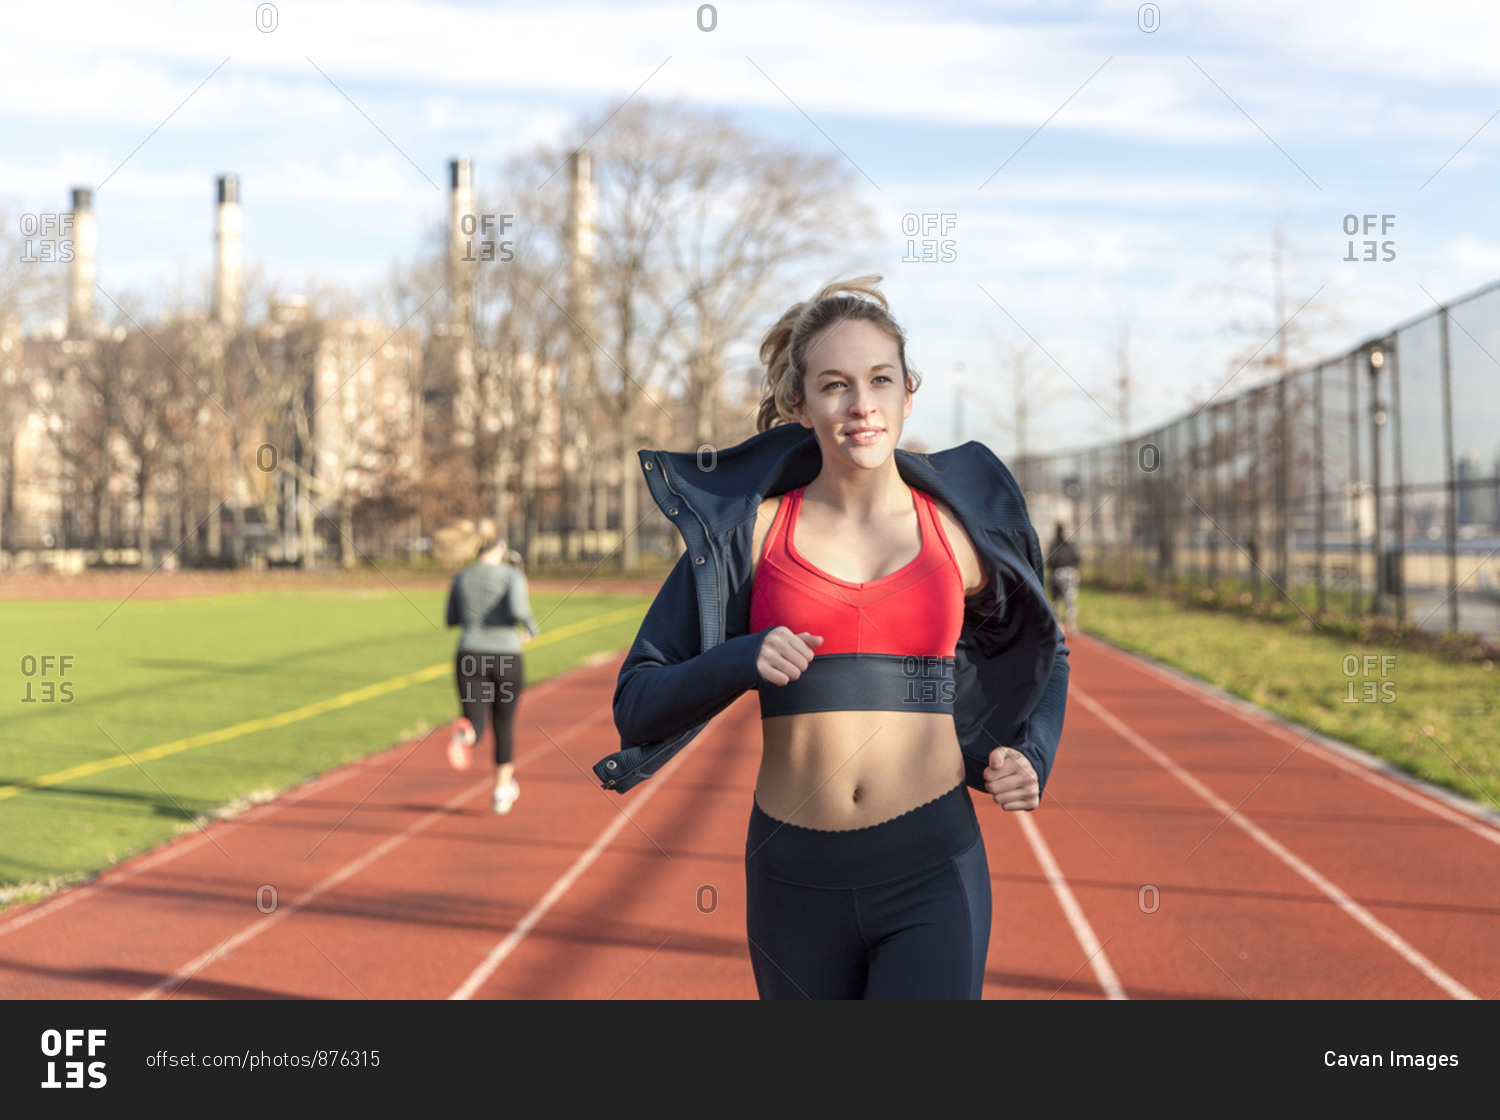 Female athlete running on sports track against sky